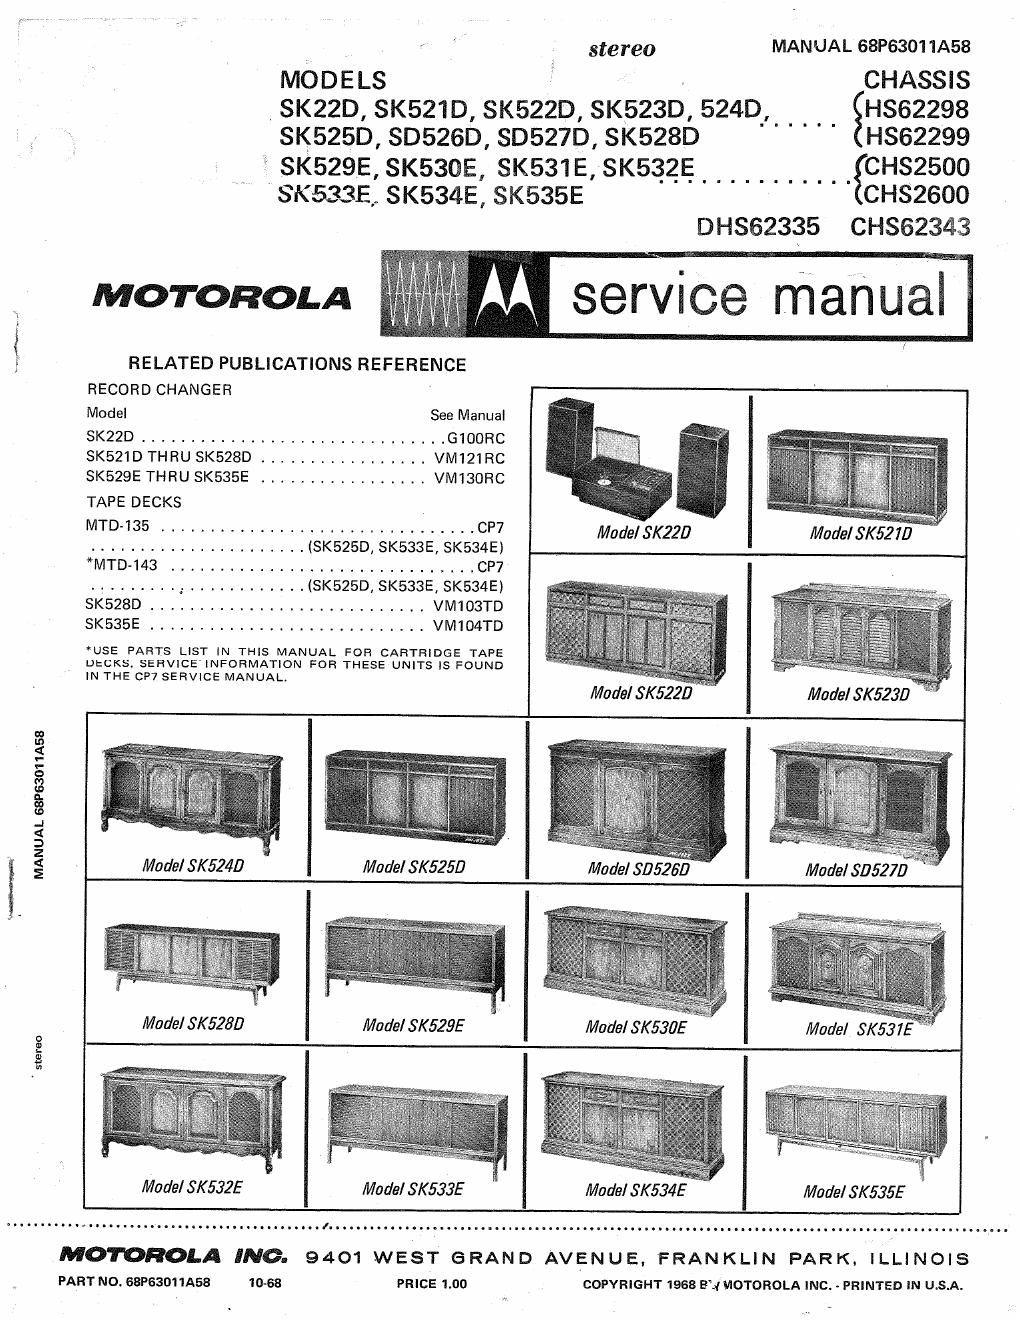 motorola sk 535 e service manual